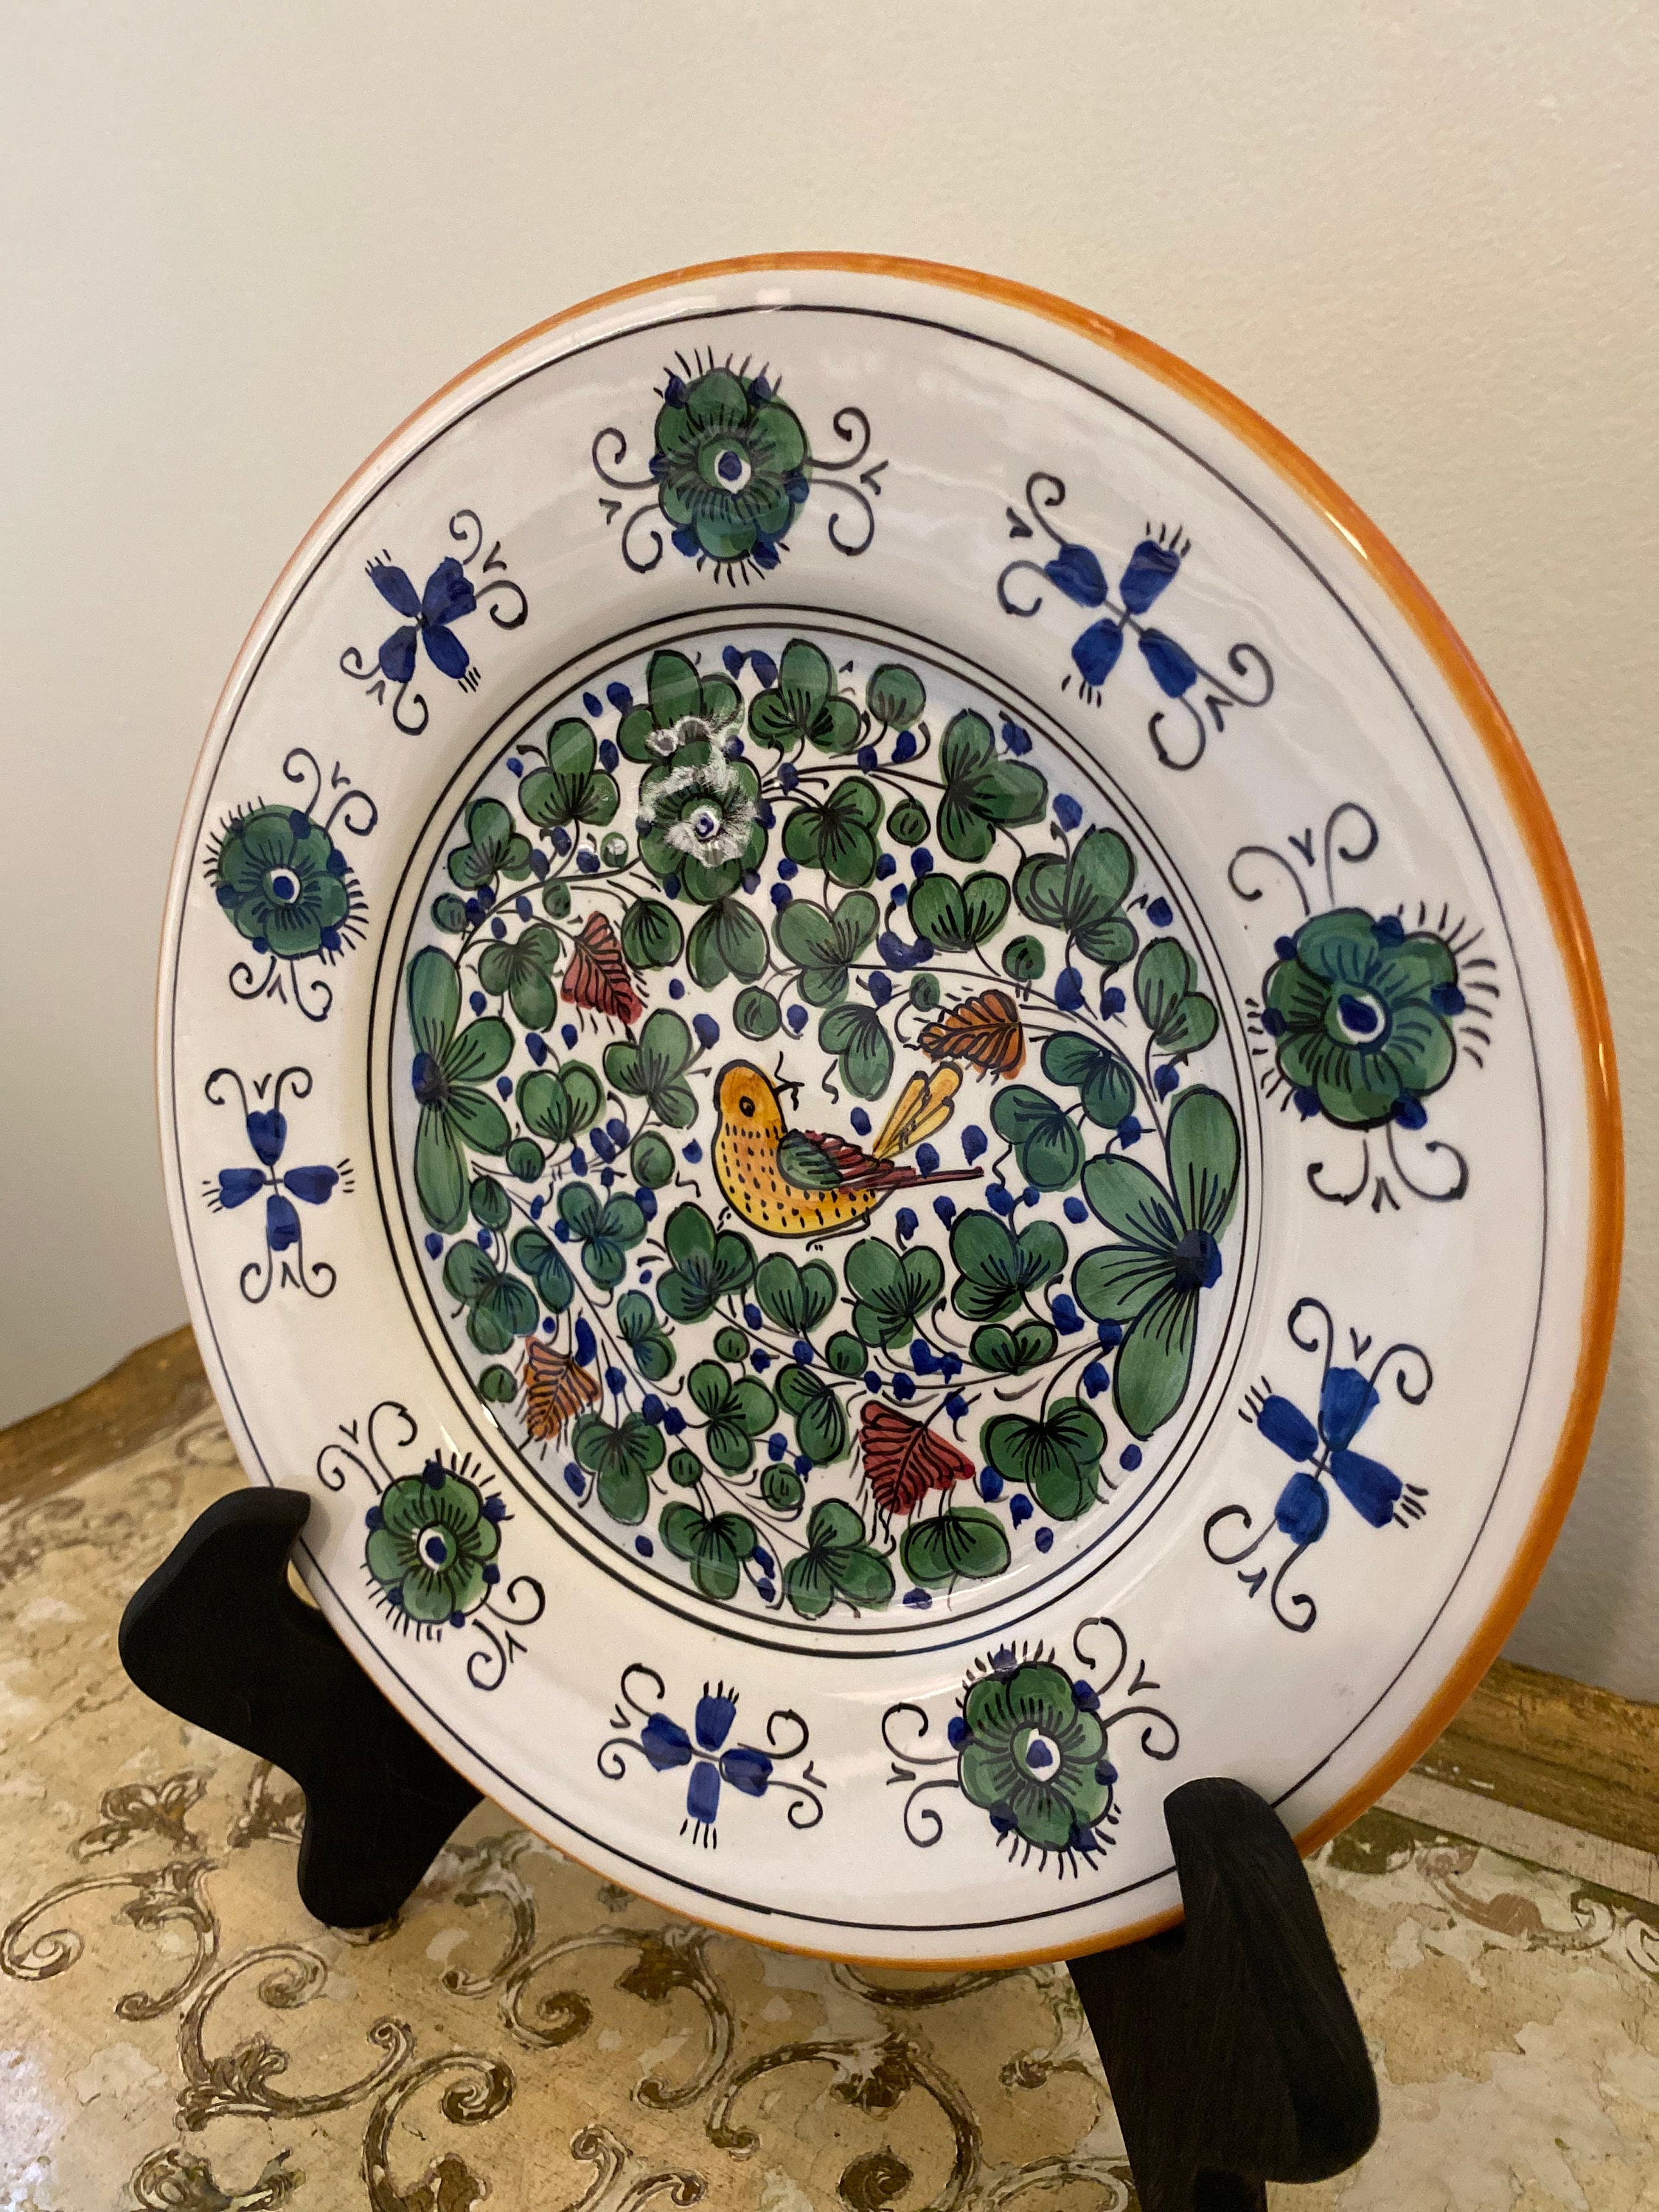 Italian pottery parmesan grater, Deruta Ceramics